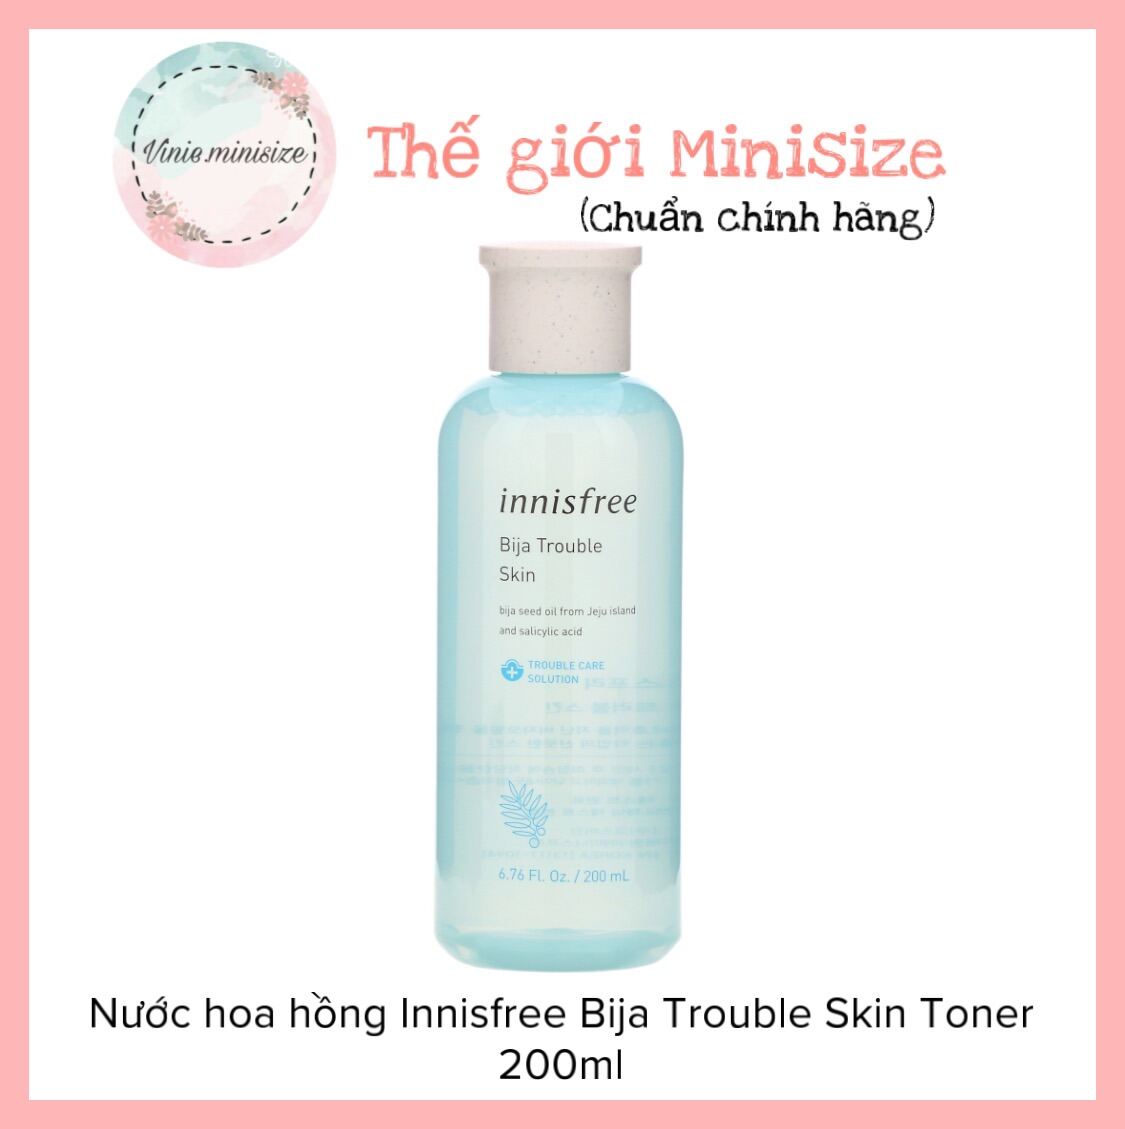 Nước hoa hồng Innisfree Bija Trouble Skin Toner 200ml | Vinie.minisize nhập khẩu